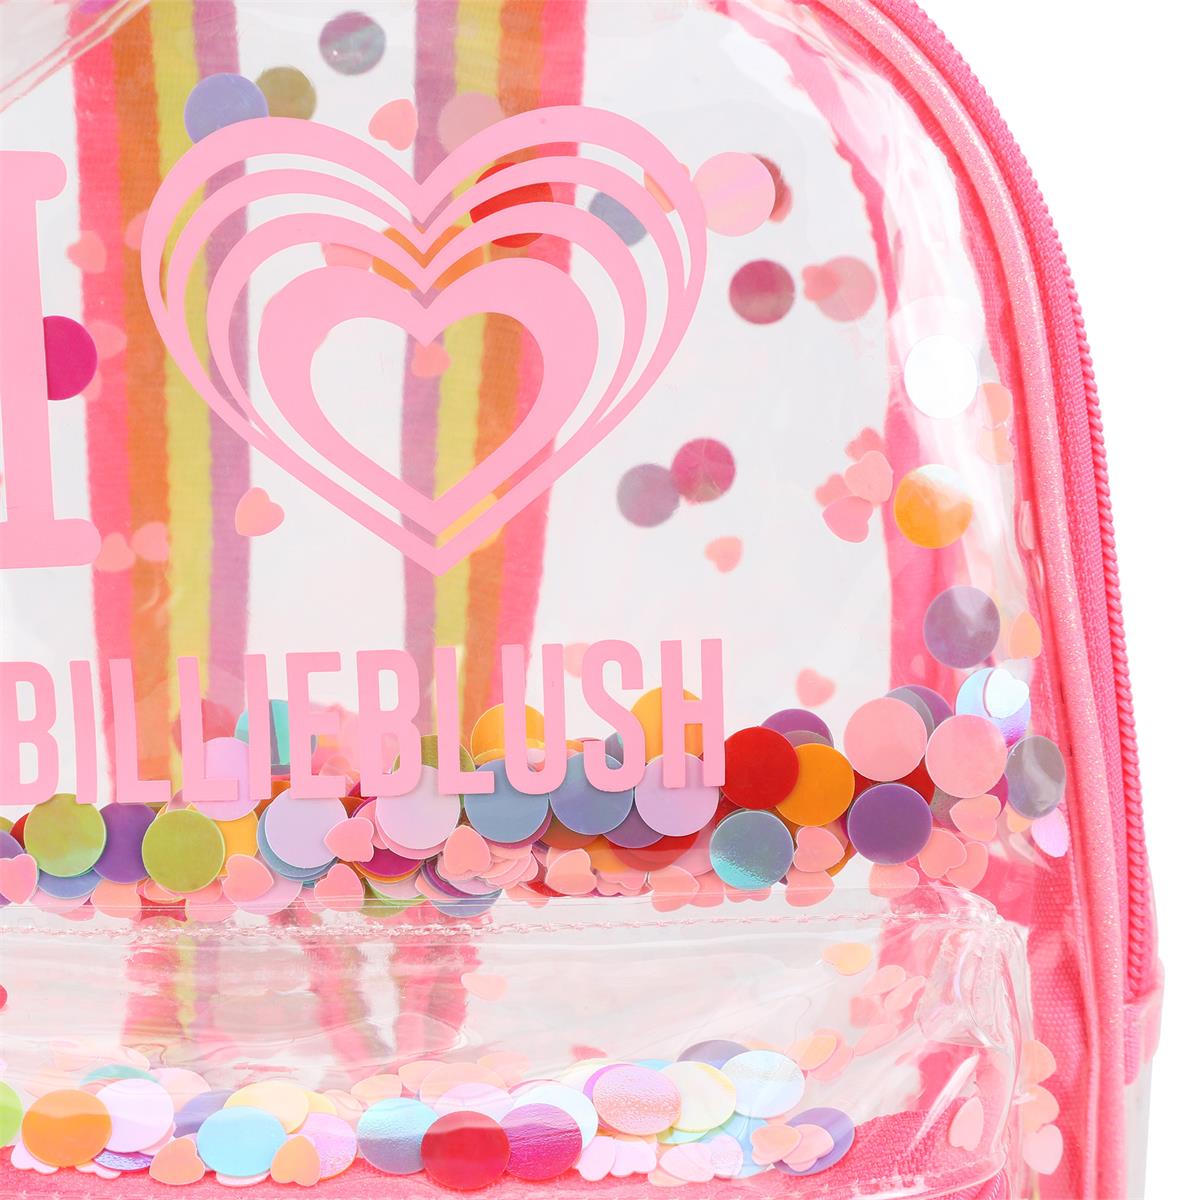 Girls Pink Backpack(27x18x10cm)